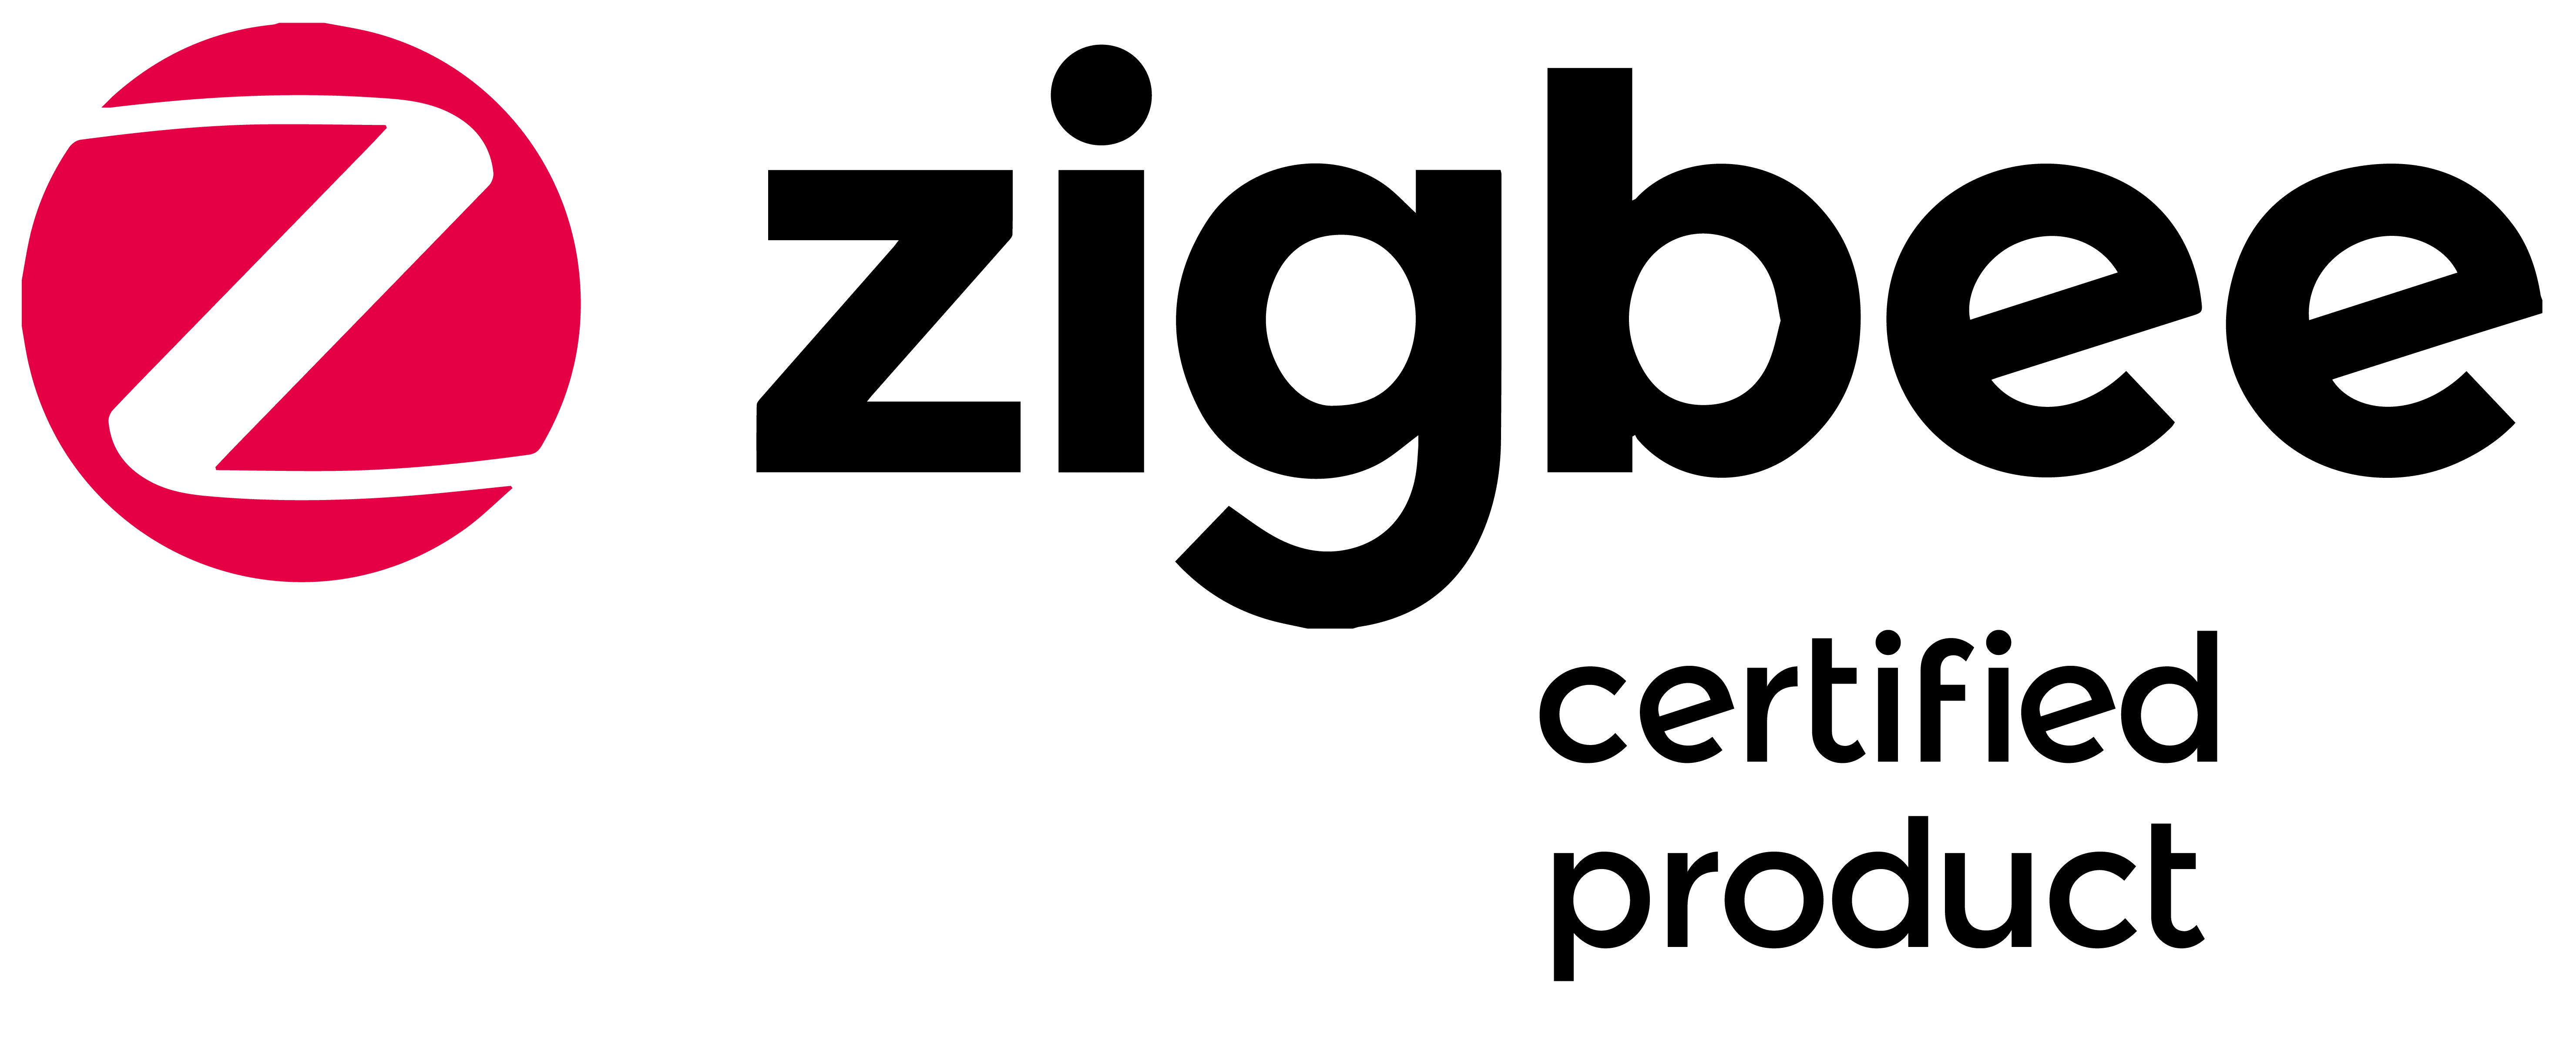 Zigbee Home Automation 1.2 certified.